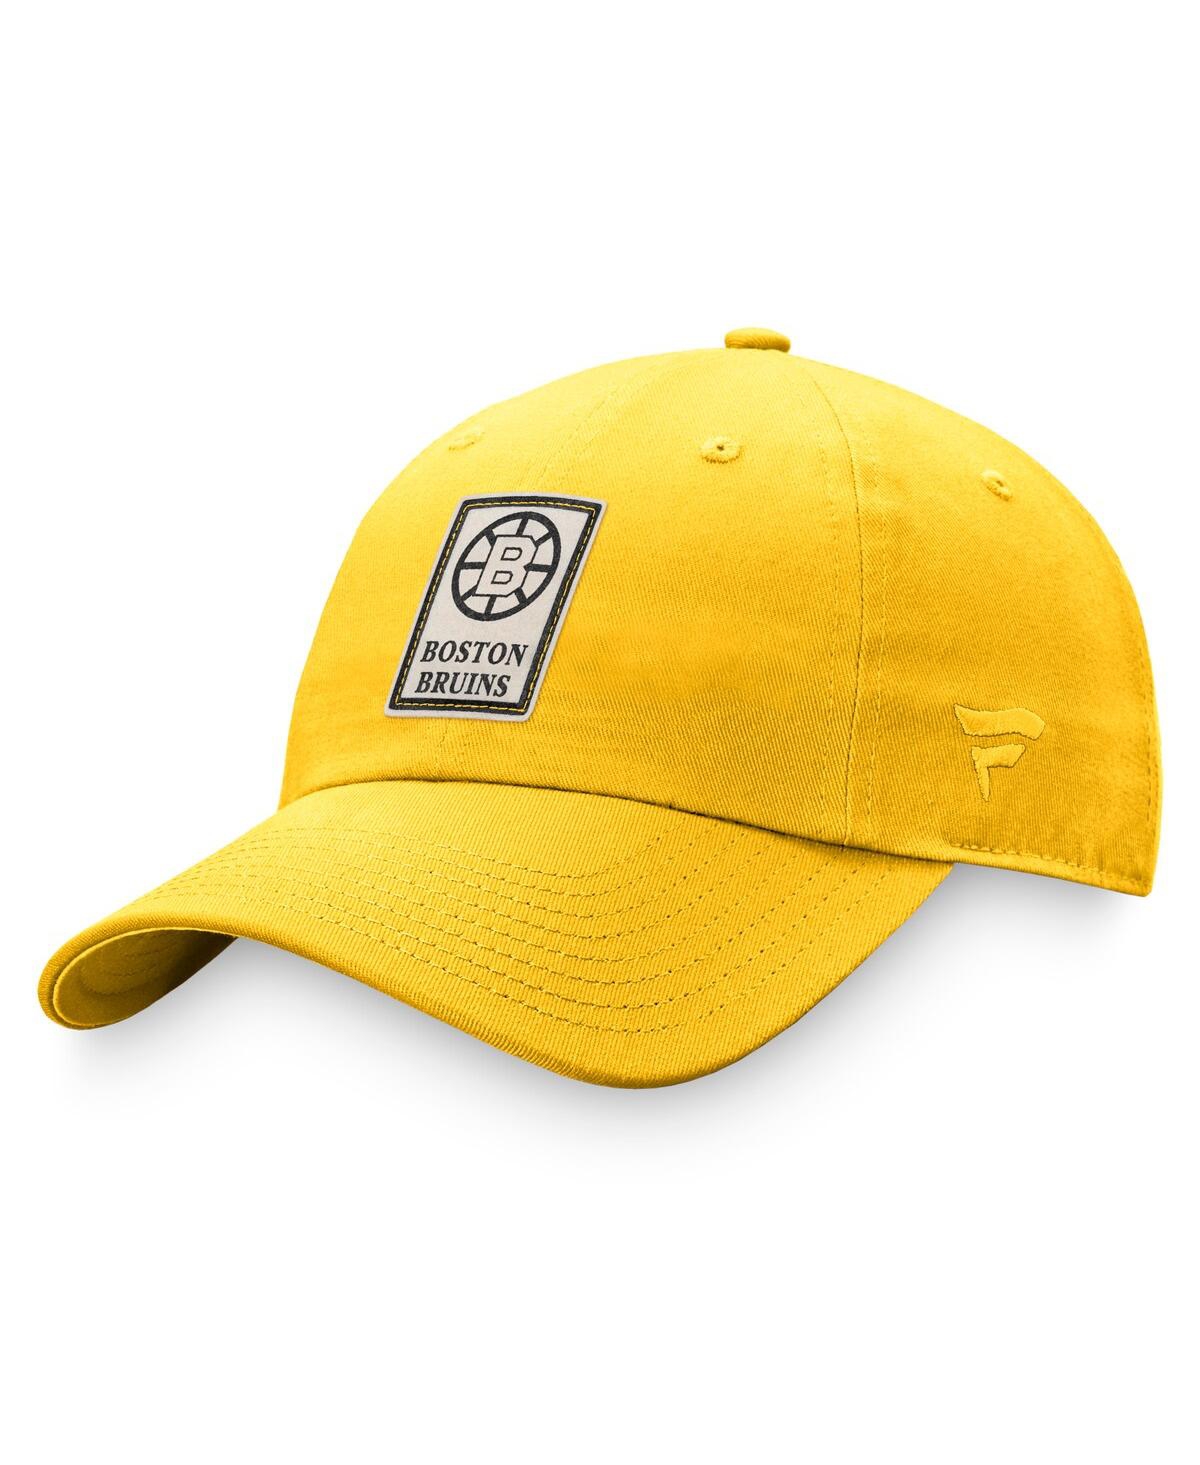 Branded Women's Gold Boston Bruins Heritage Vintage-like Adjustable Hat - Yellw Gold